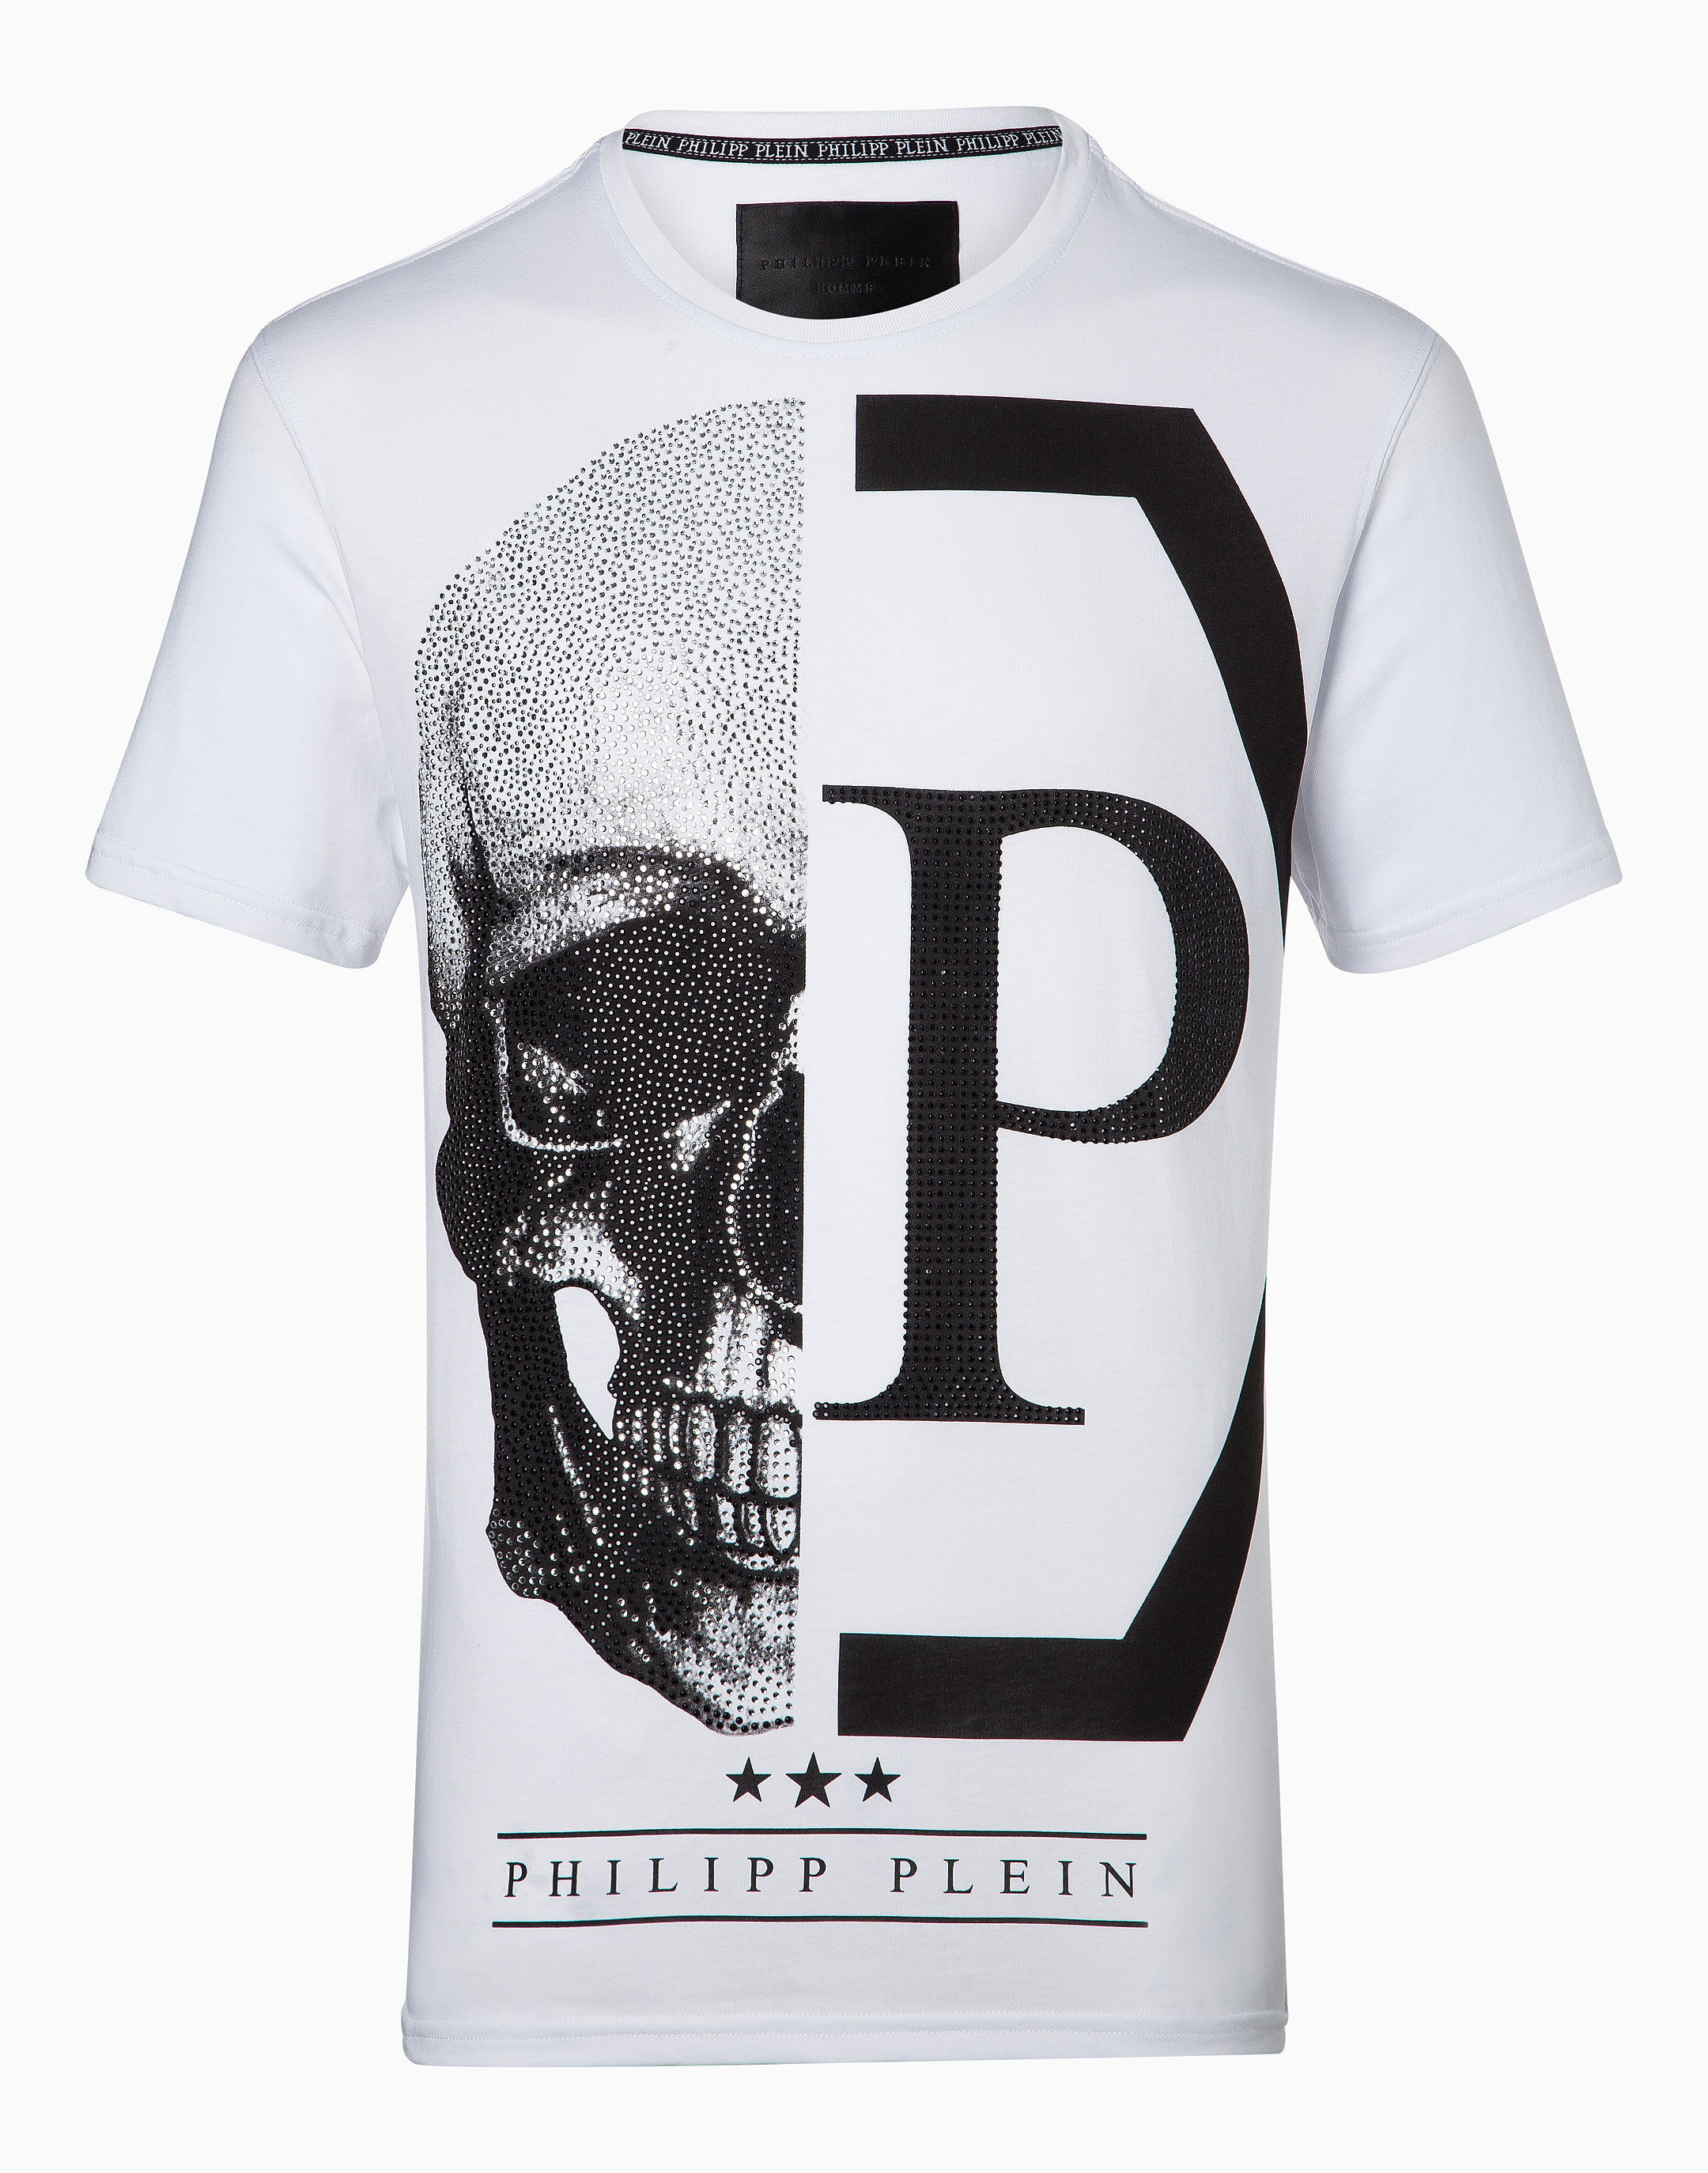 philipp plein grey t shirt